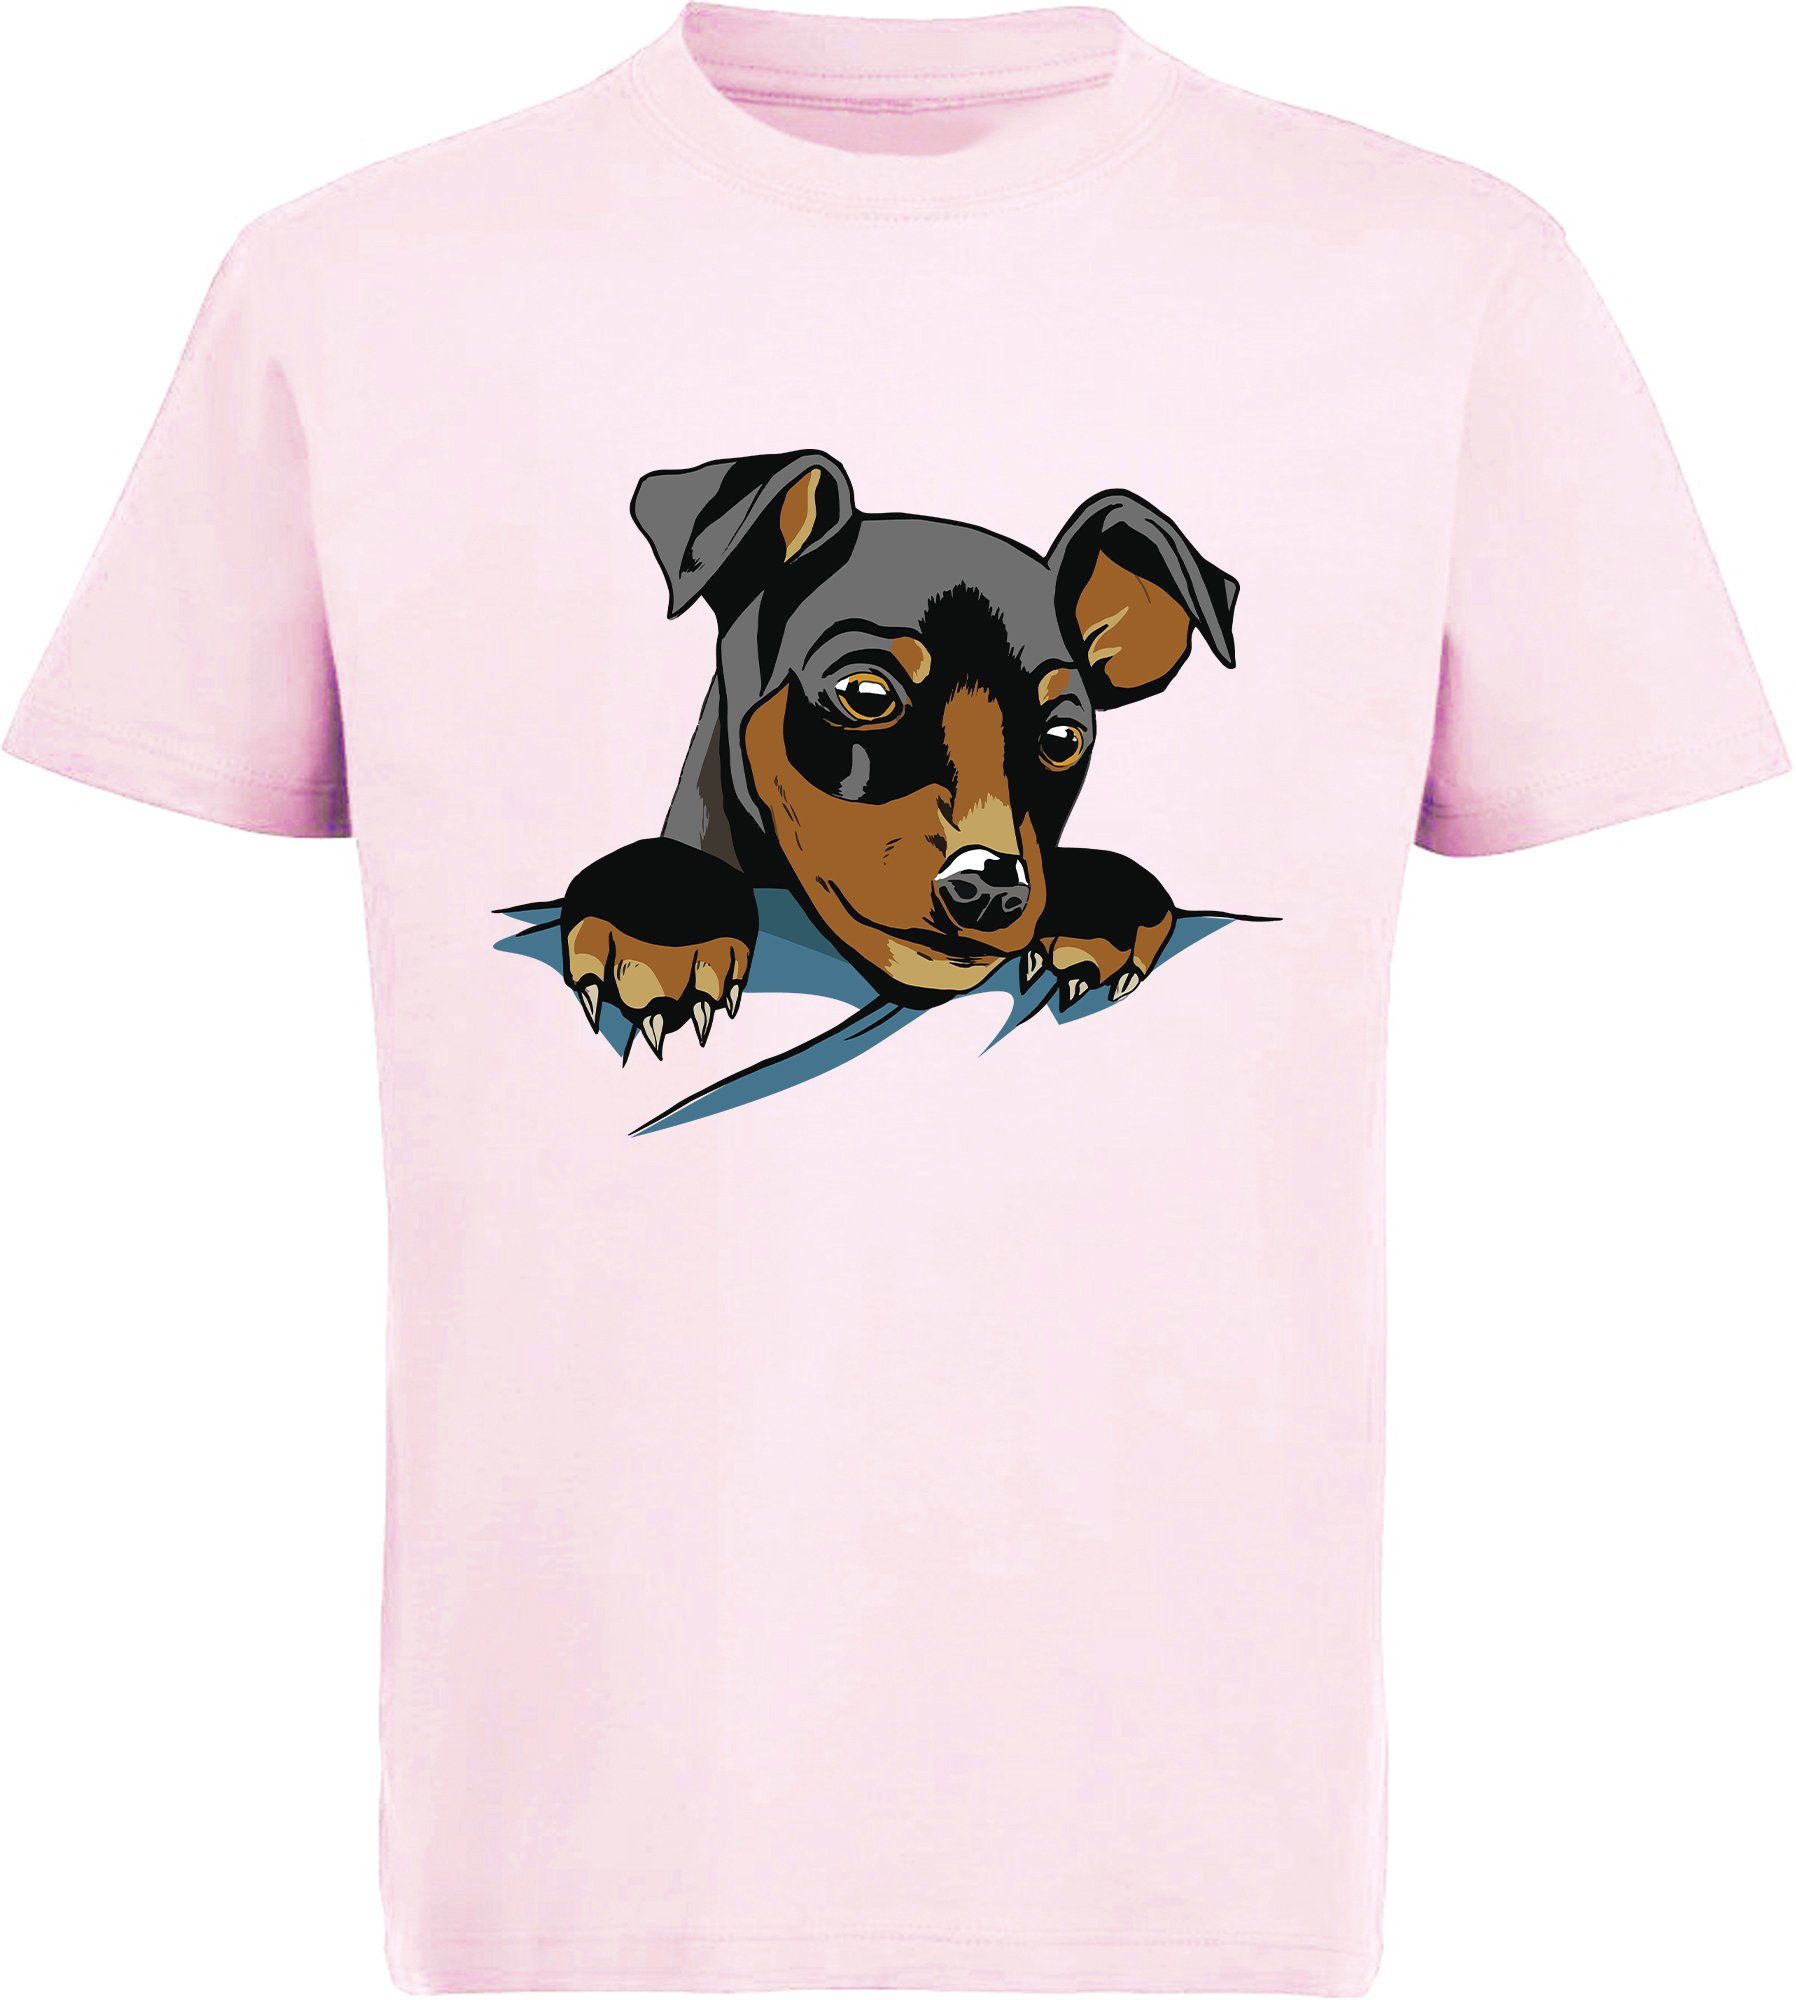 MyDesign24 Print-Shirt bedrucktes Kinder Hunde T-Shirt - Süßer Welpe Baumwollshirt mit Aufdruck, i227 rosa